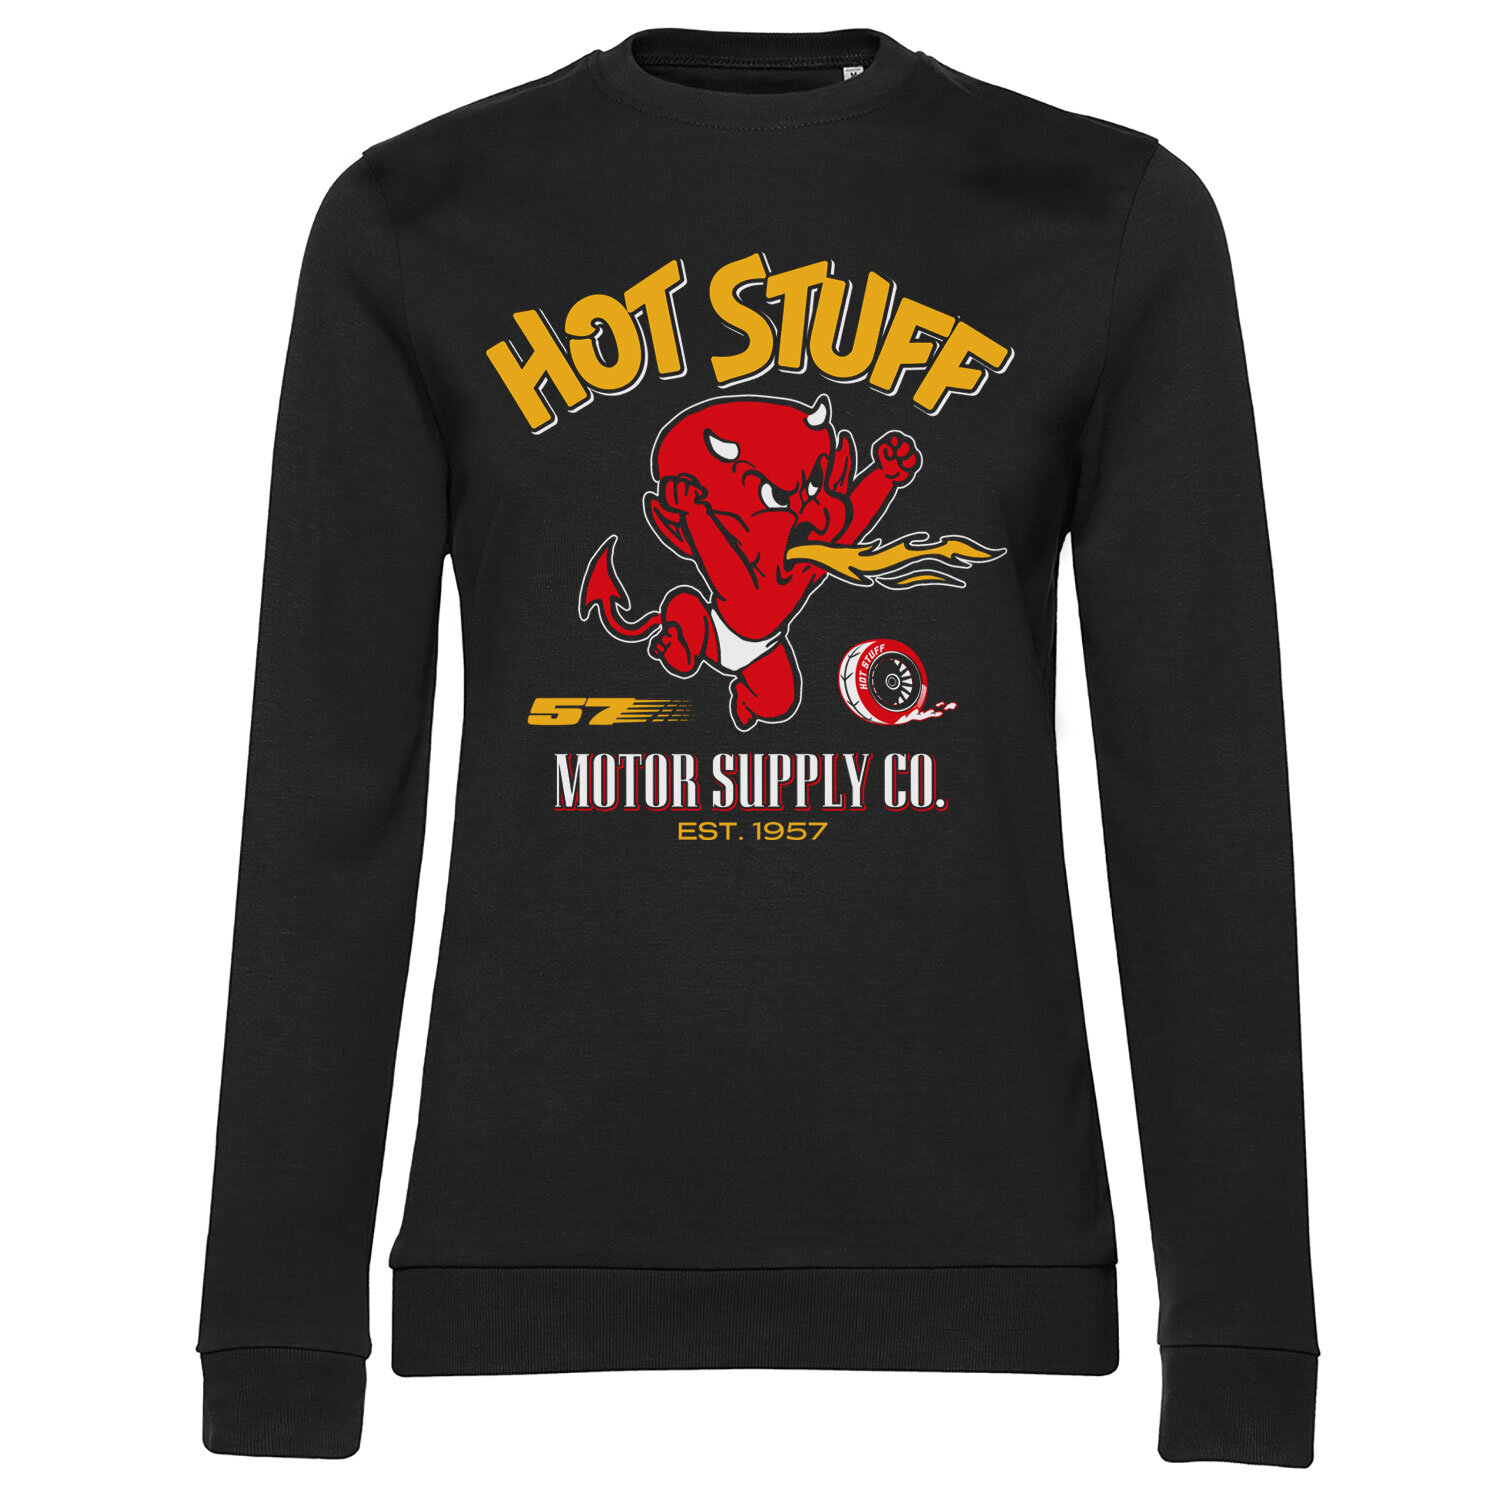 Hot Stuff - Motor Supply Co Girly Sweatshirt